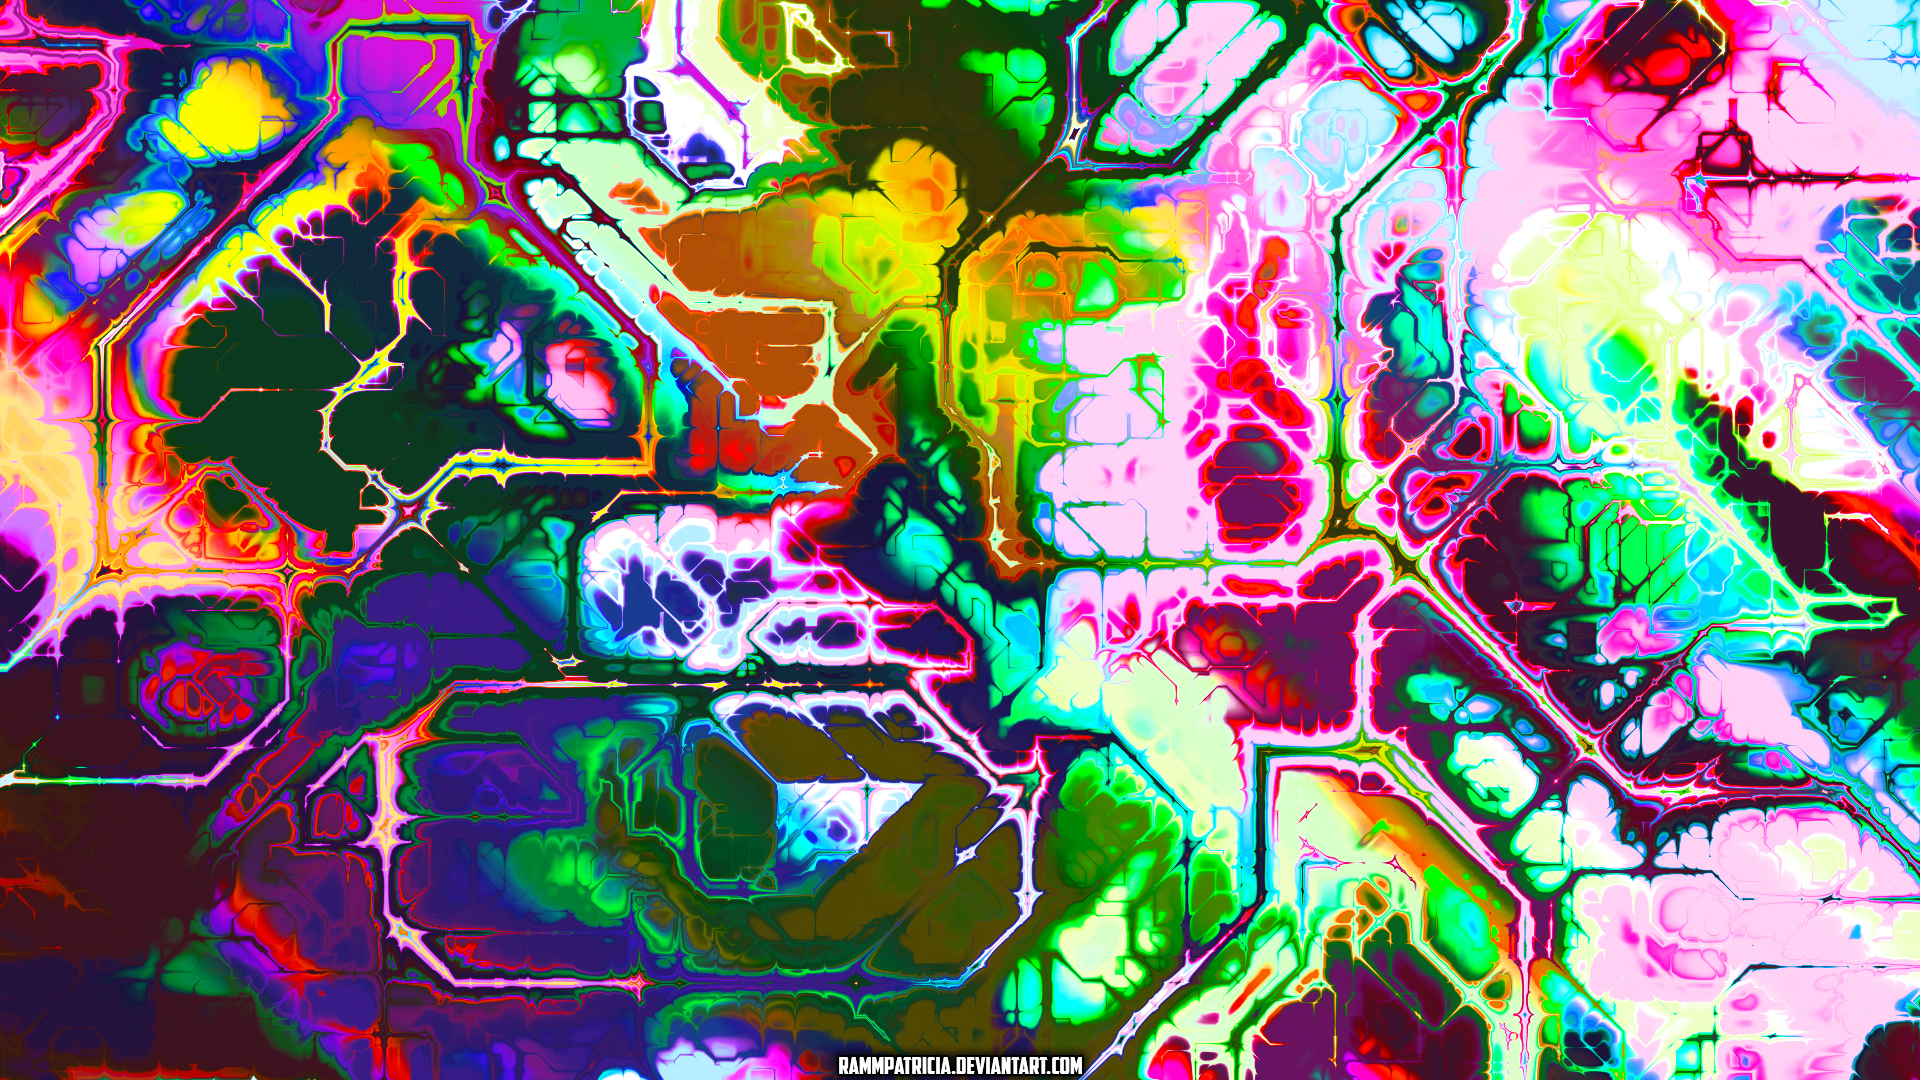 General 1920x1080 digital art RammPatricia iridescent colorful watermarked